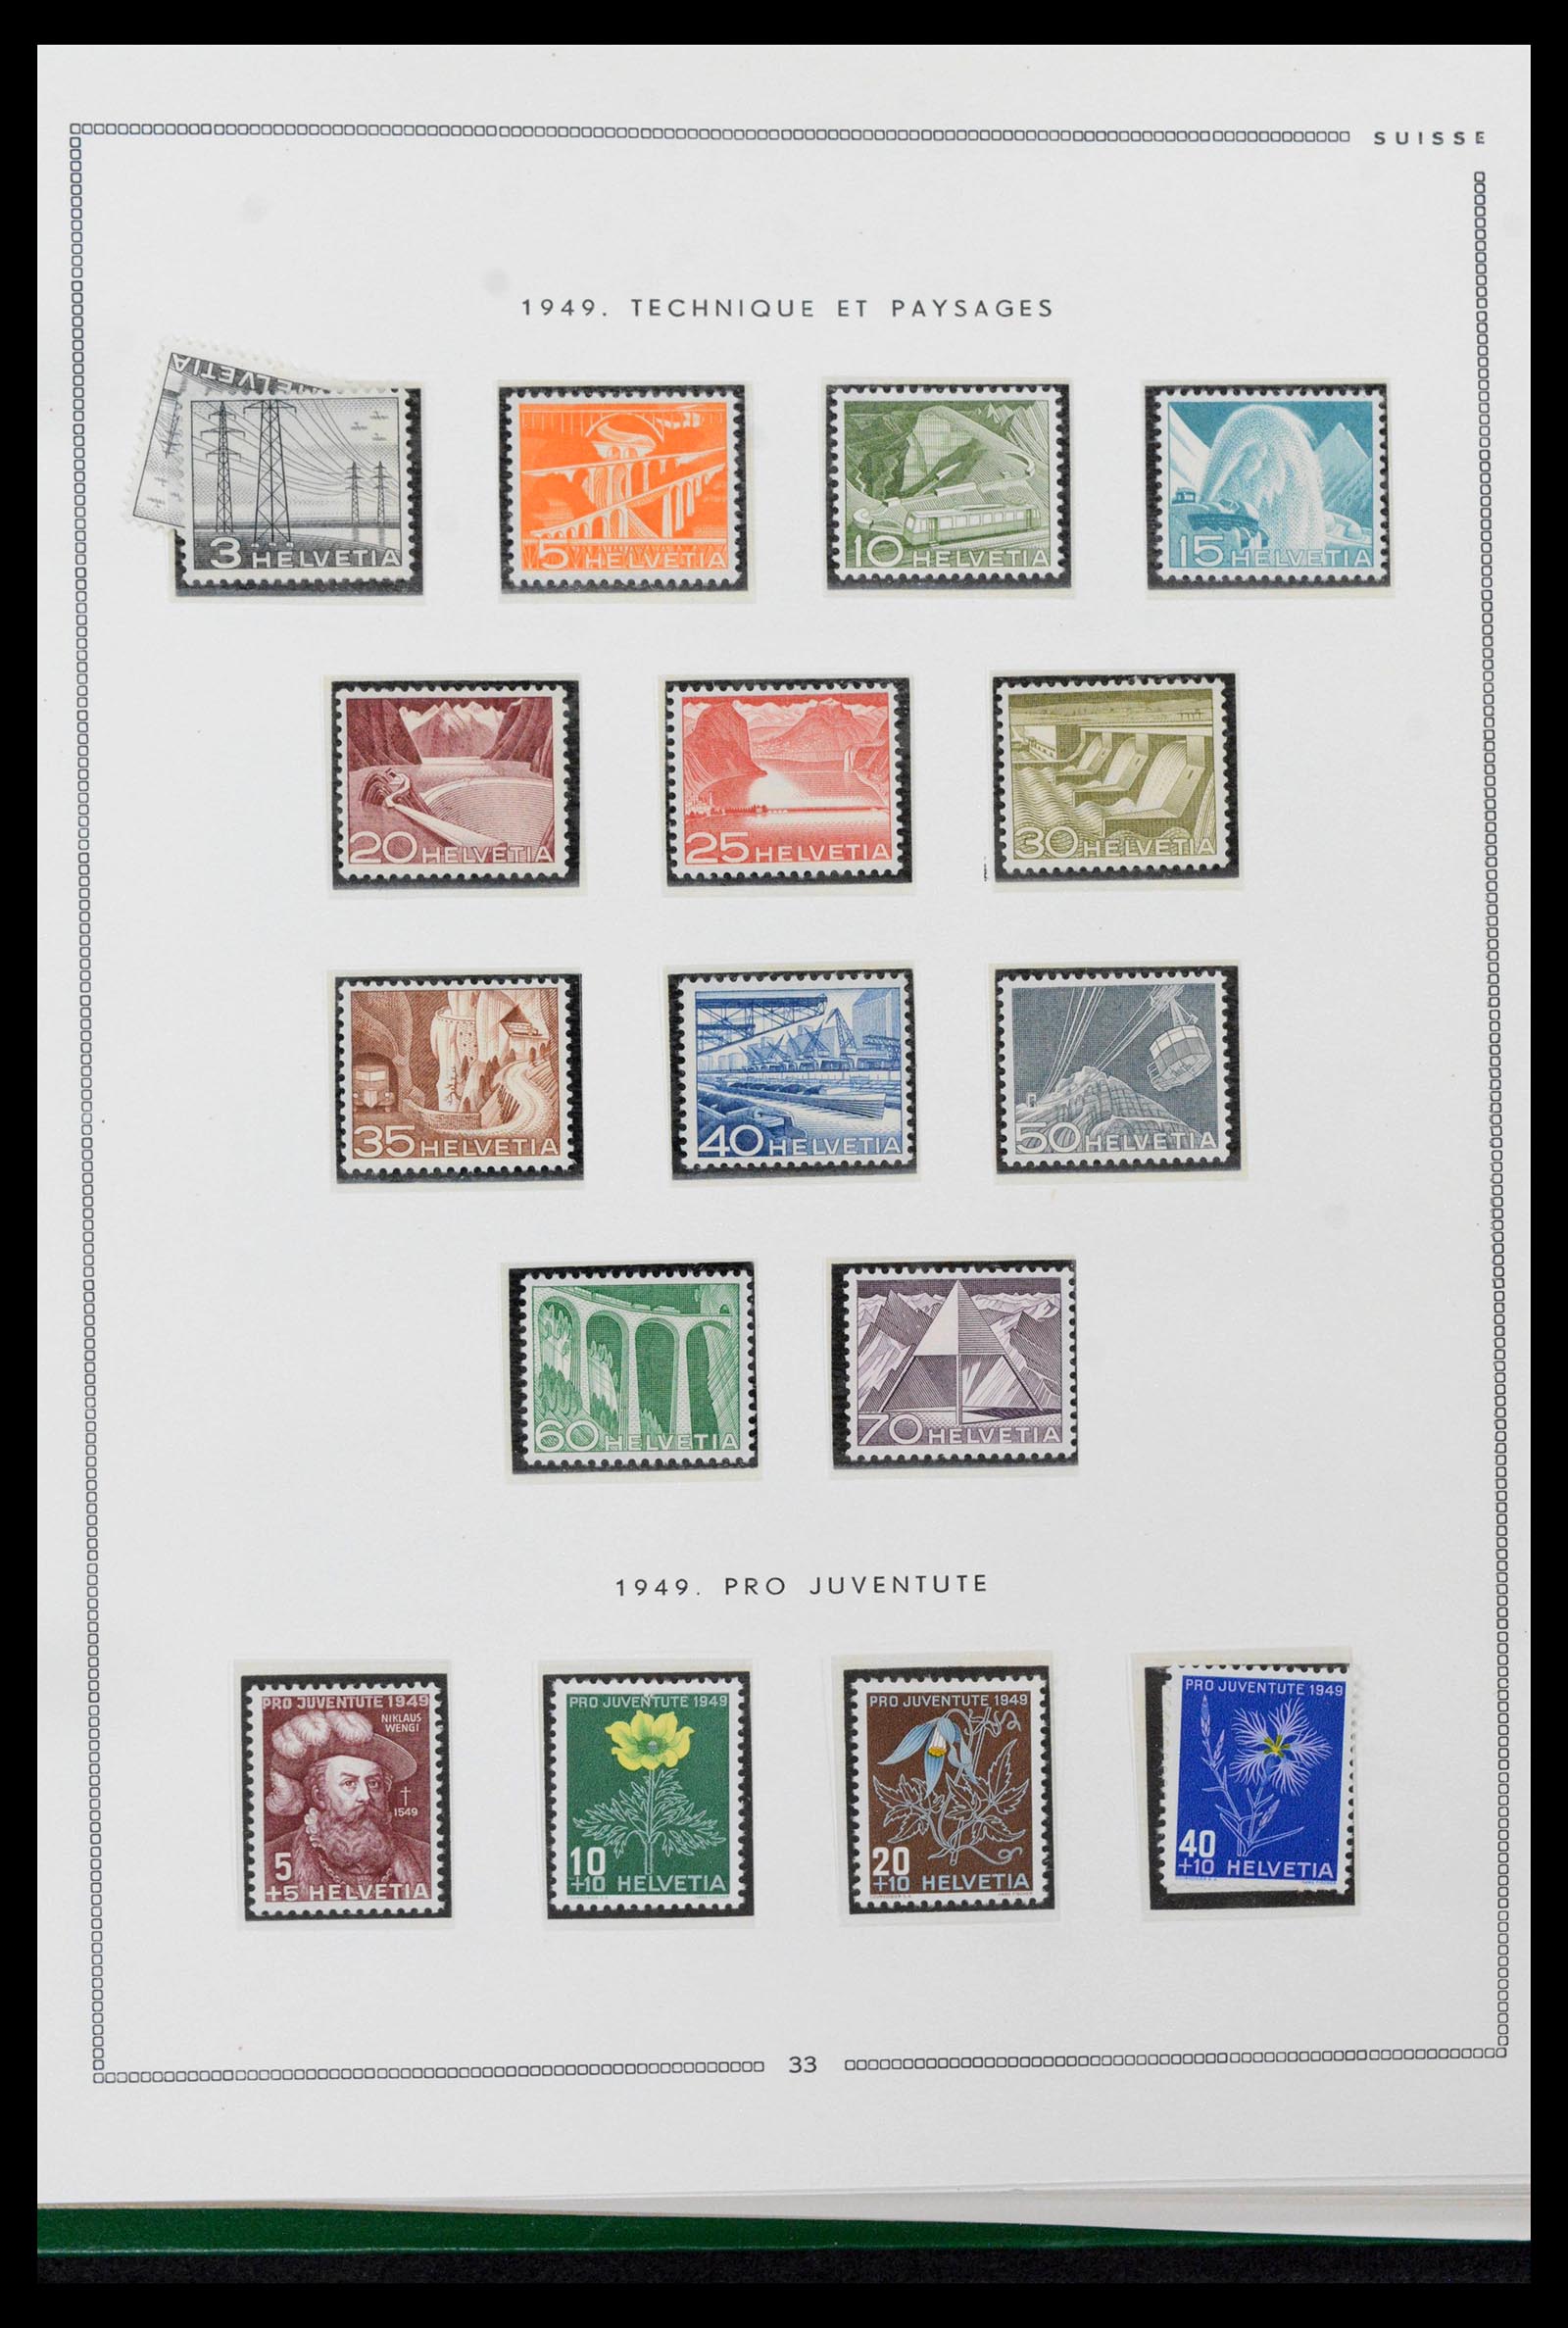 39096 0028 - Stamp collection 39096 Switzerland 1907-1963.